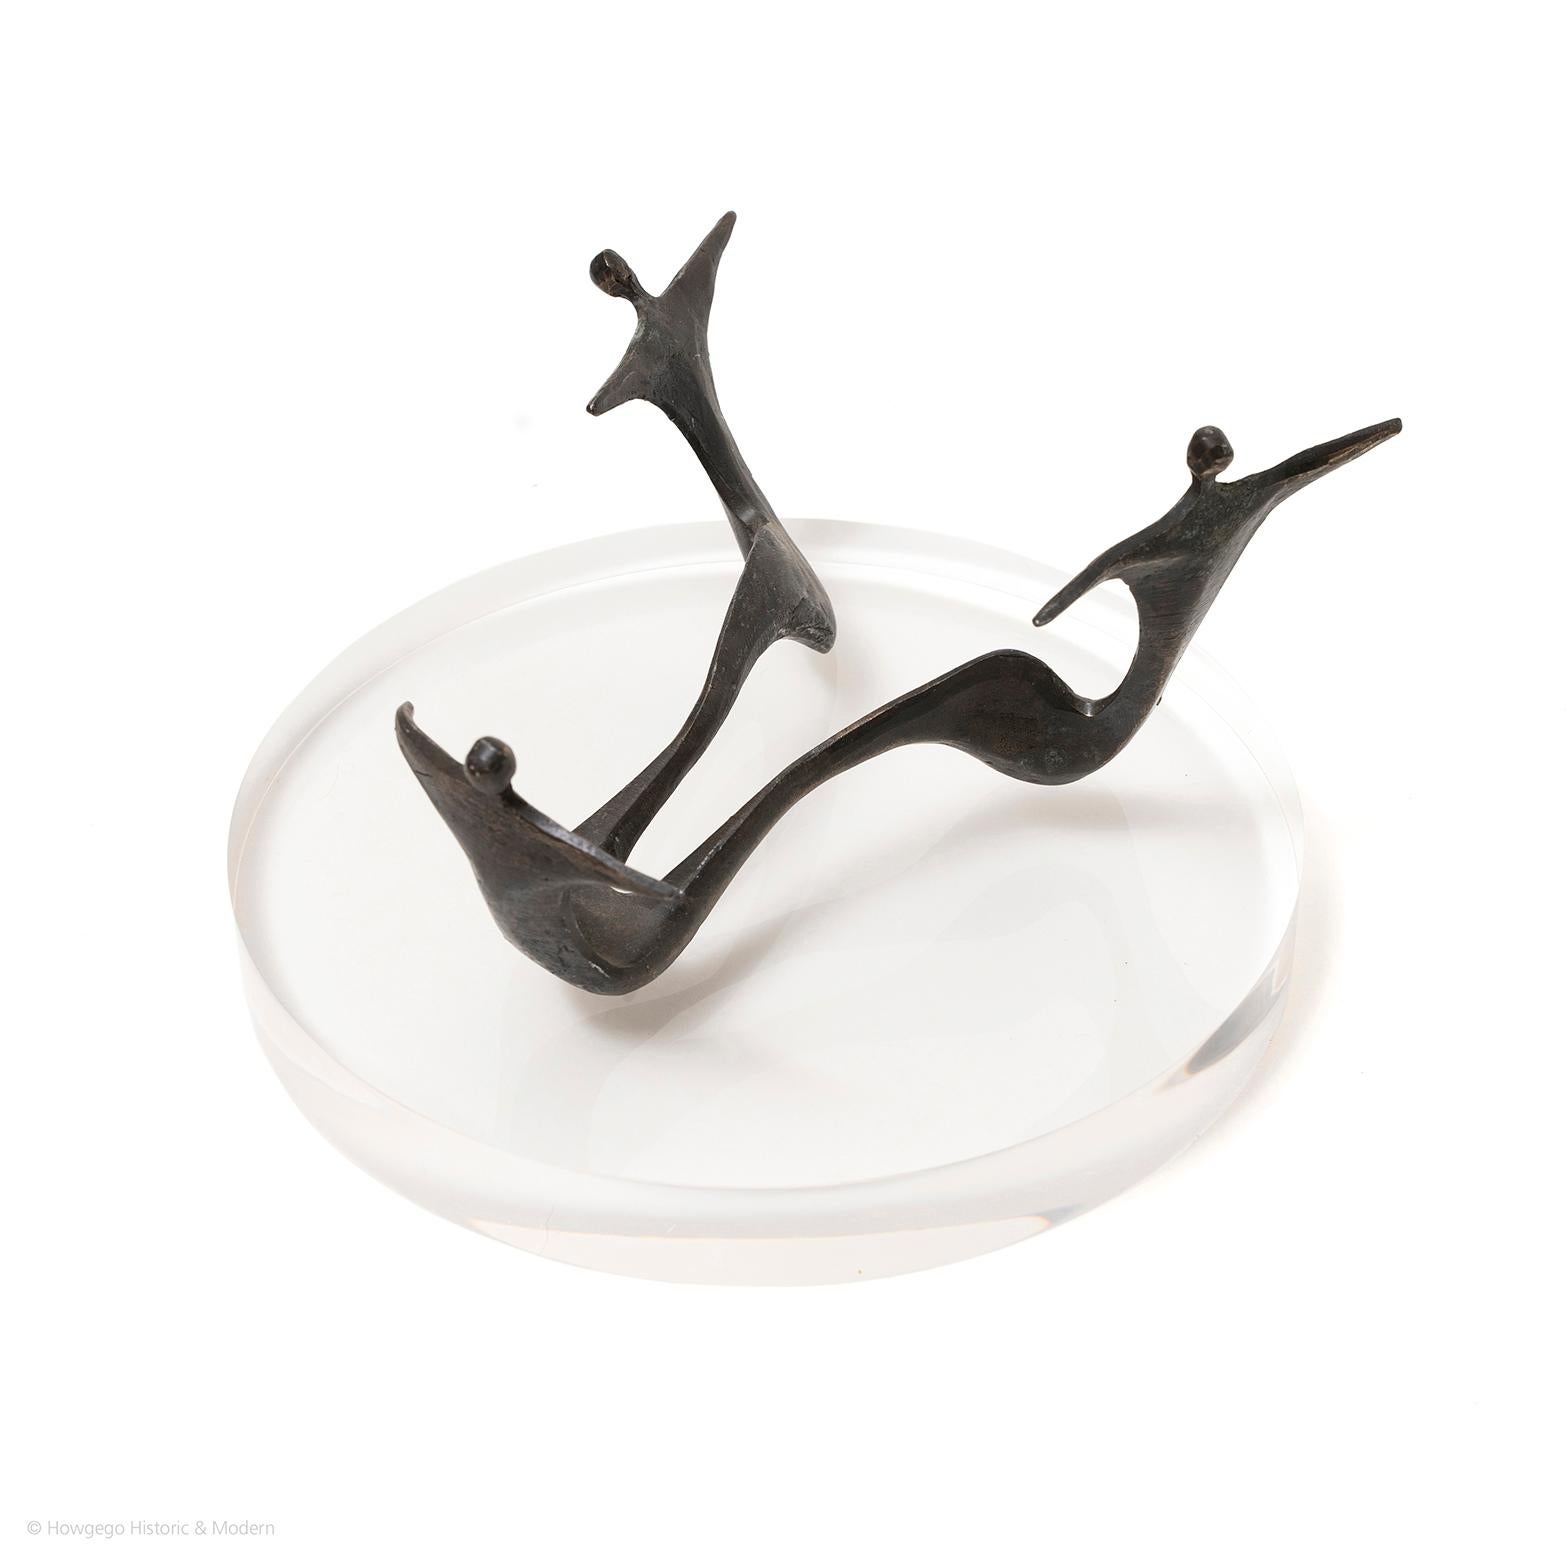 French Sculpture Bronze Figurative 3 Dancers Biomorphic Abstract diameter 22cm 8 3/4